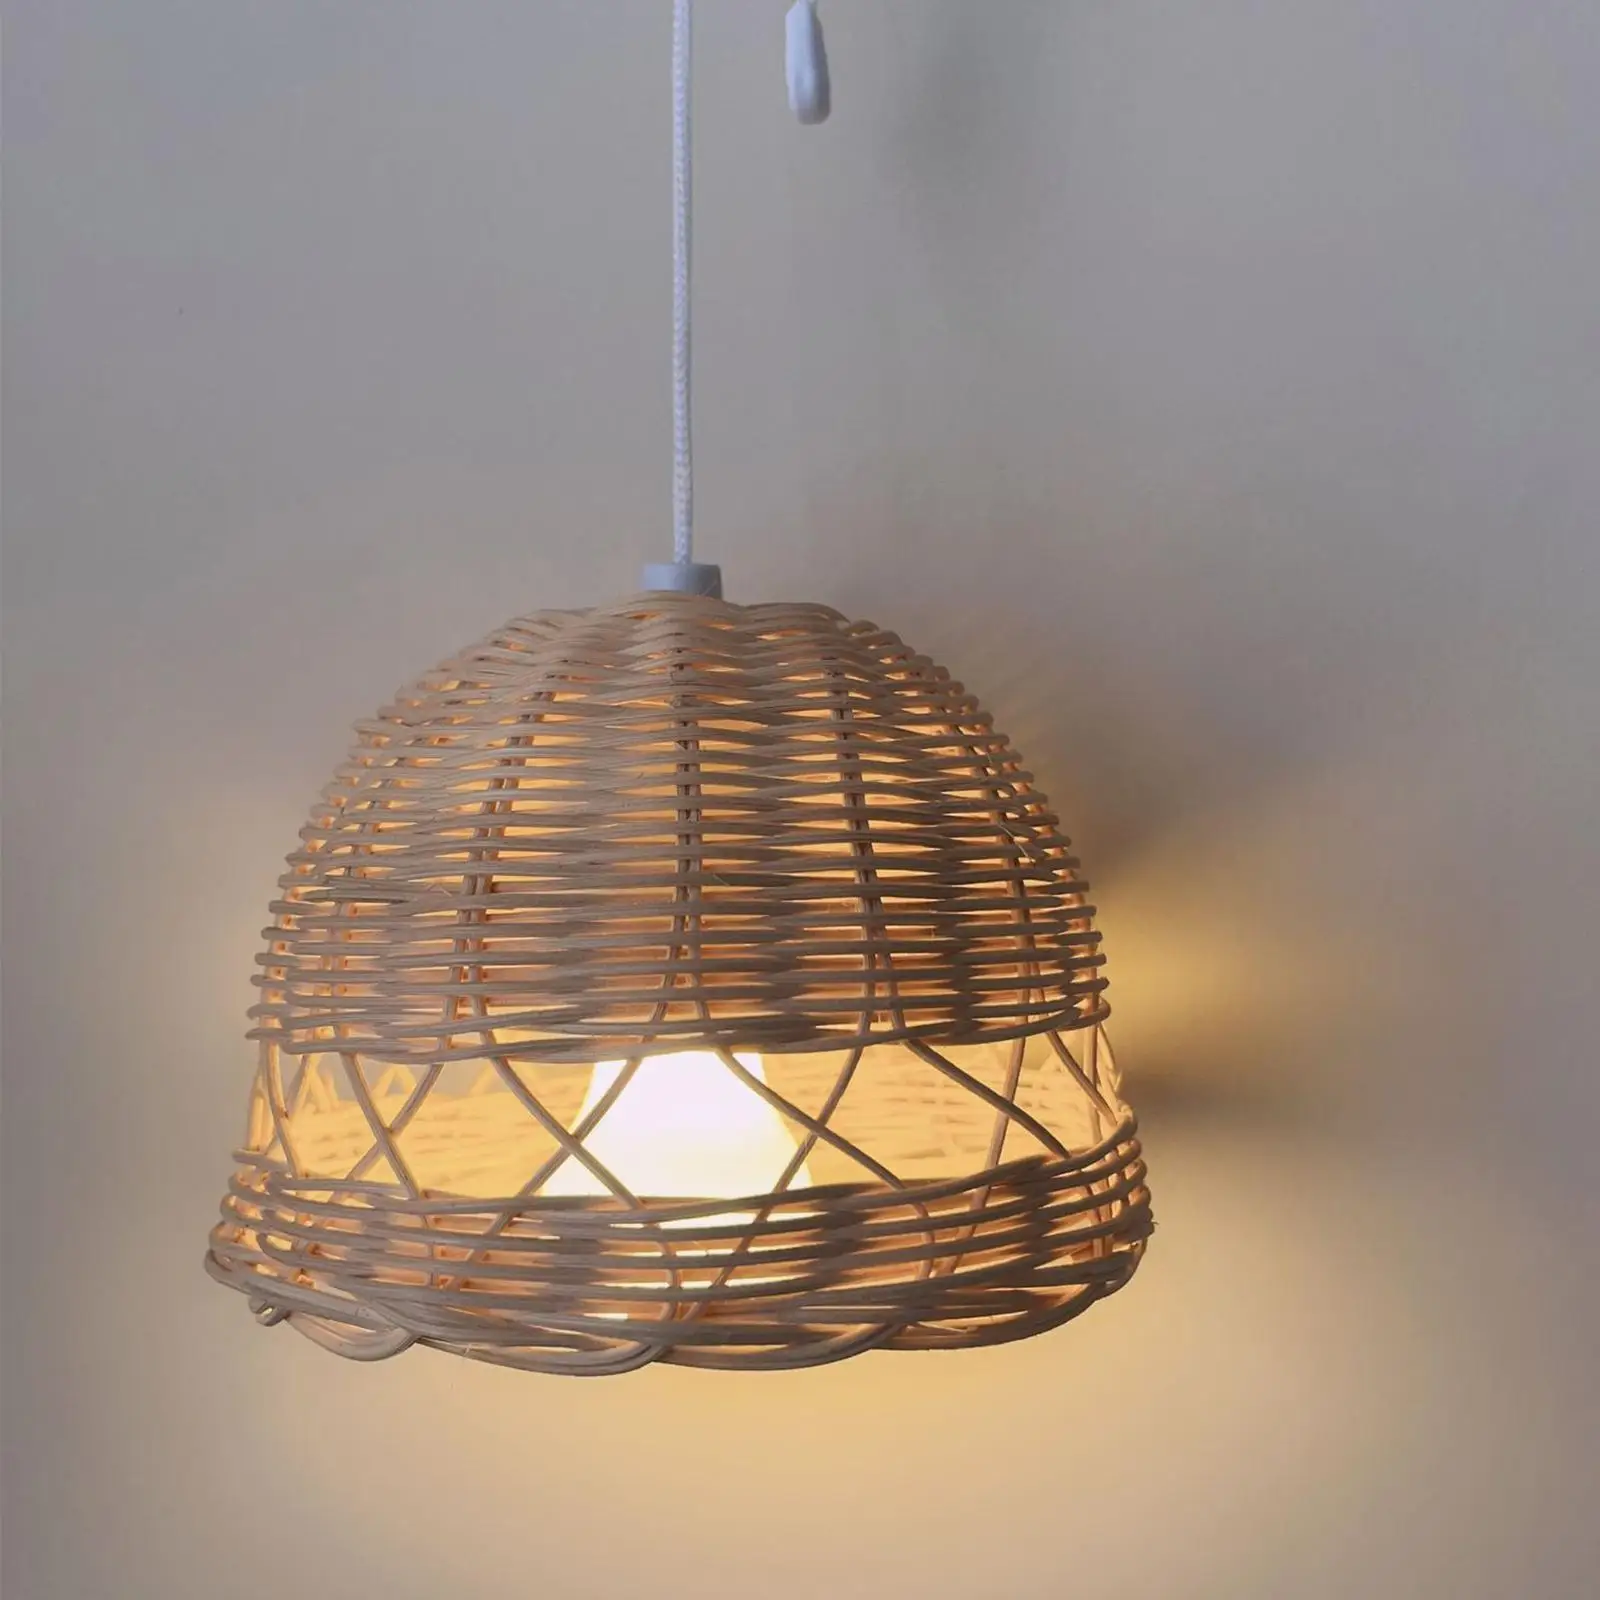 Rattan Lamp Shade Lamp Decoration Mini Boho Handmade Basket Chandelier Lamp Shade for Kids Room Living Room Cafe